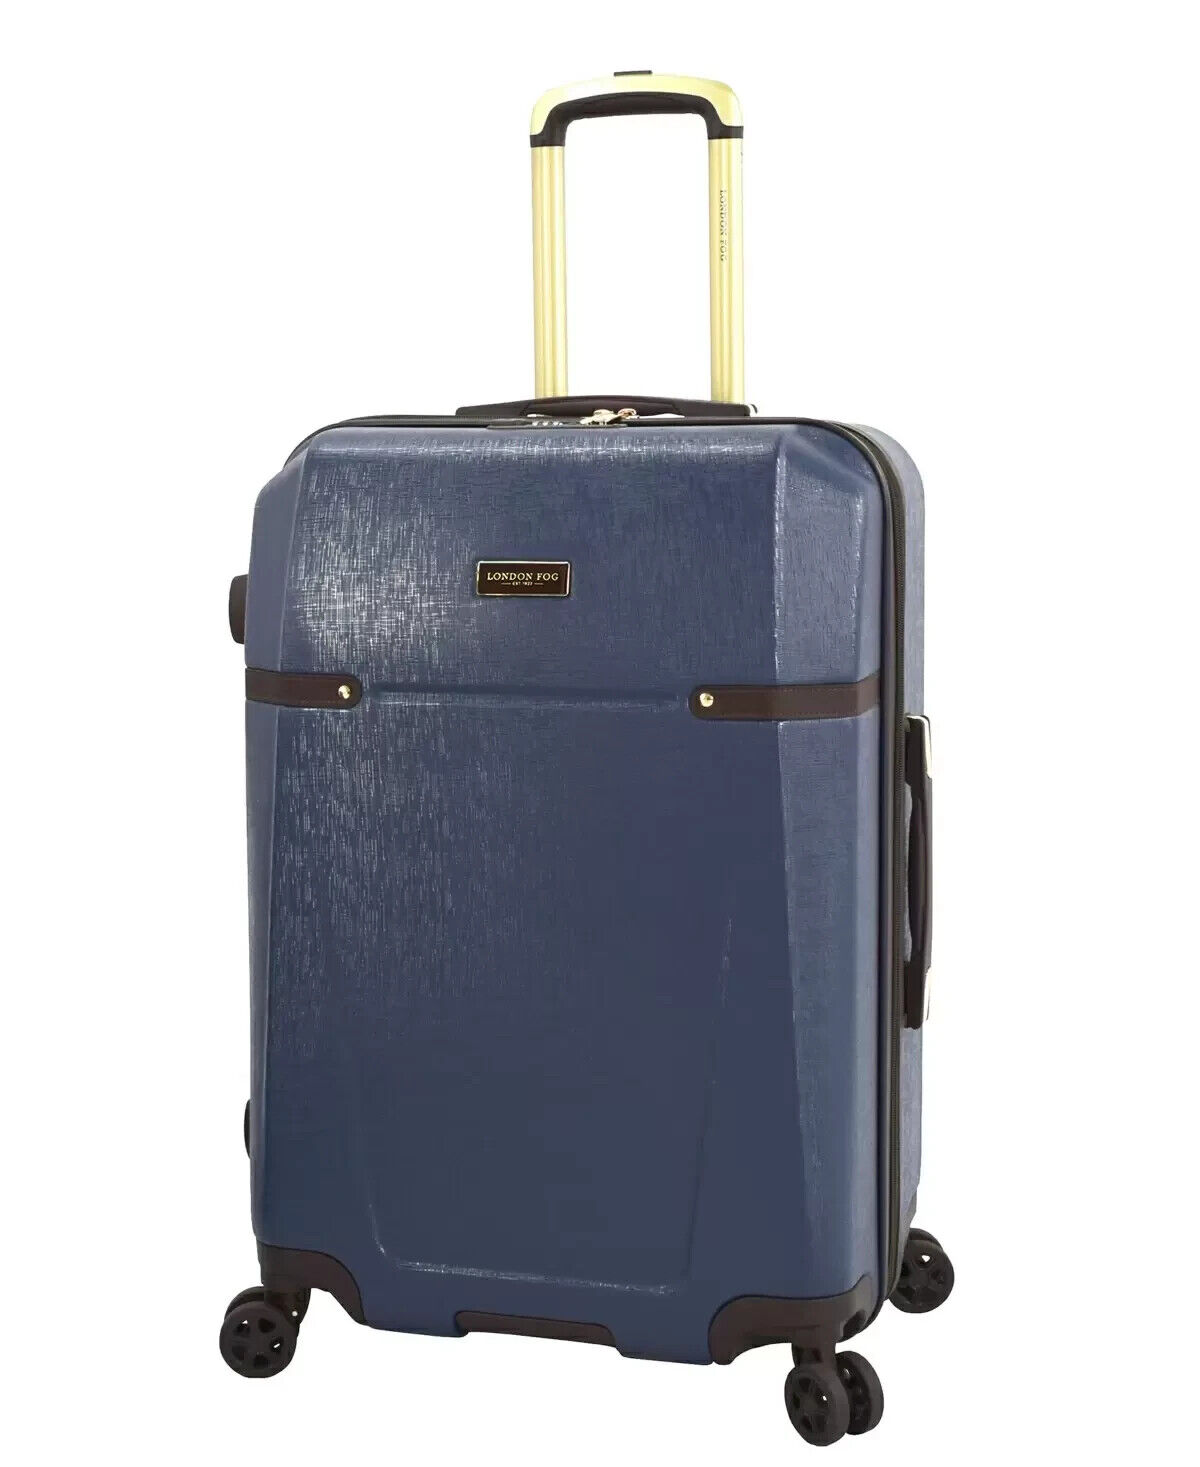 London Fog Brentwood II Expandable Hardside Spinner Suitcase